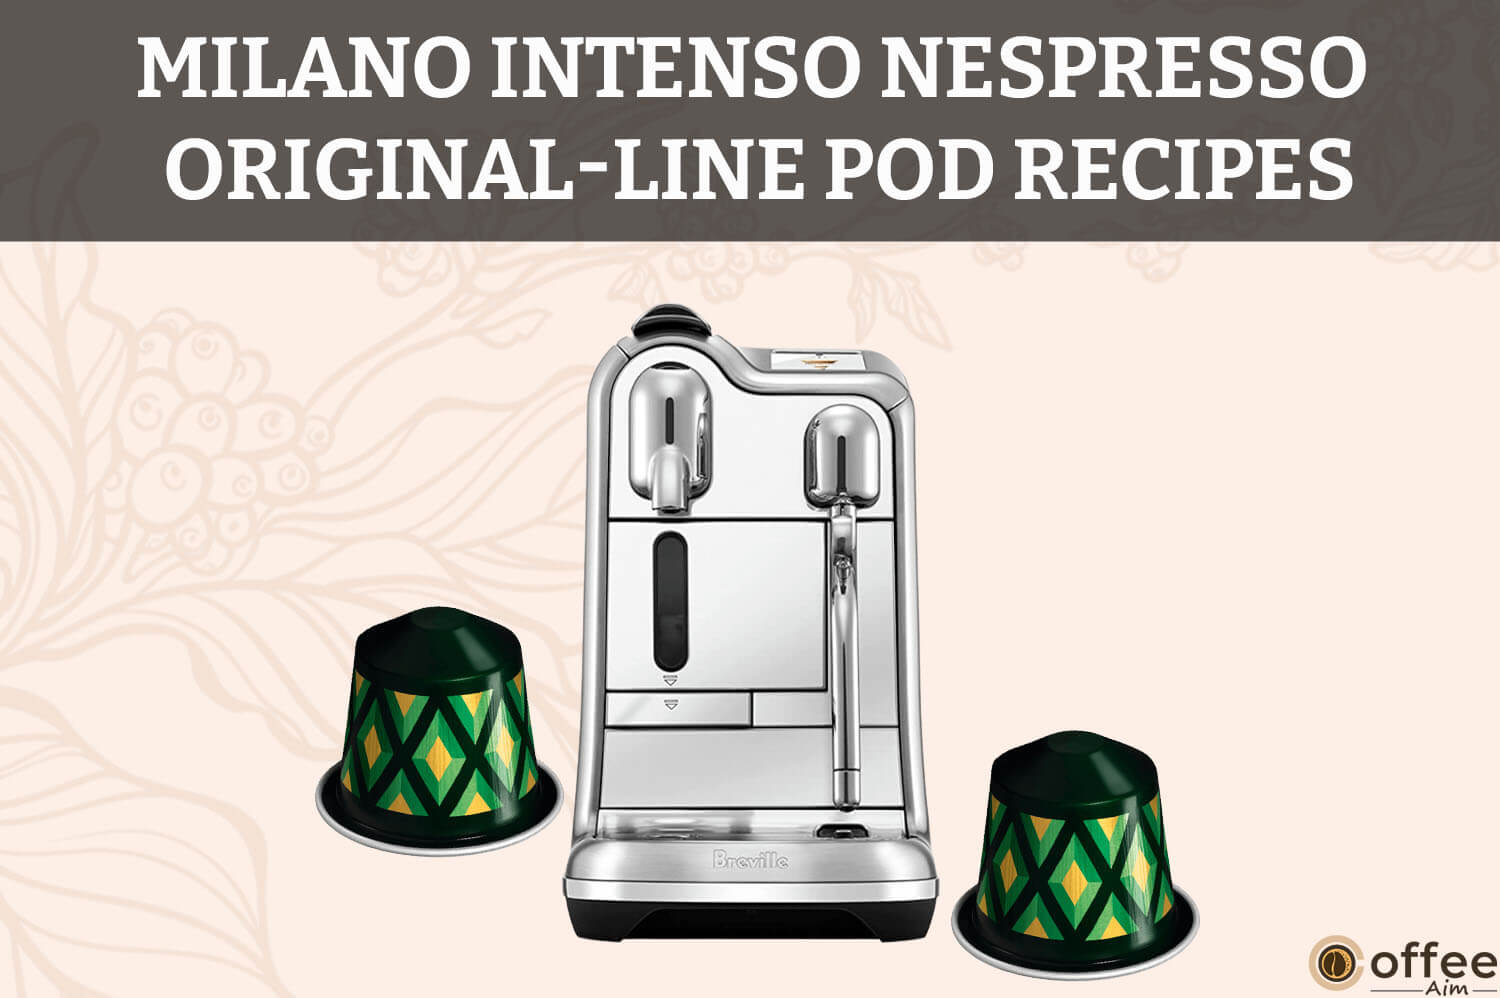 Featured image for the article "Milano Intenso Nespresso Original-Line Pod Recipes"